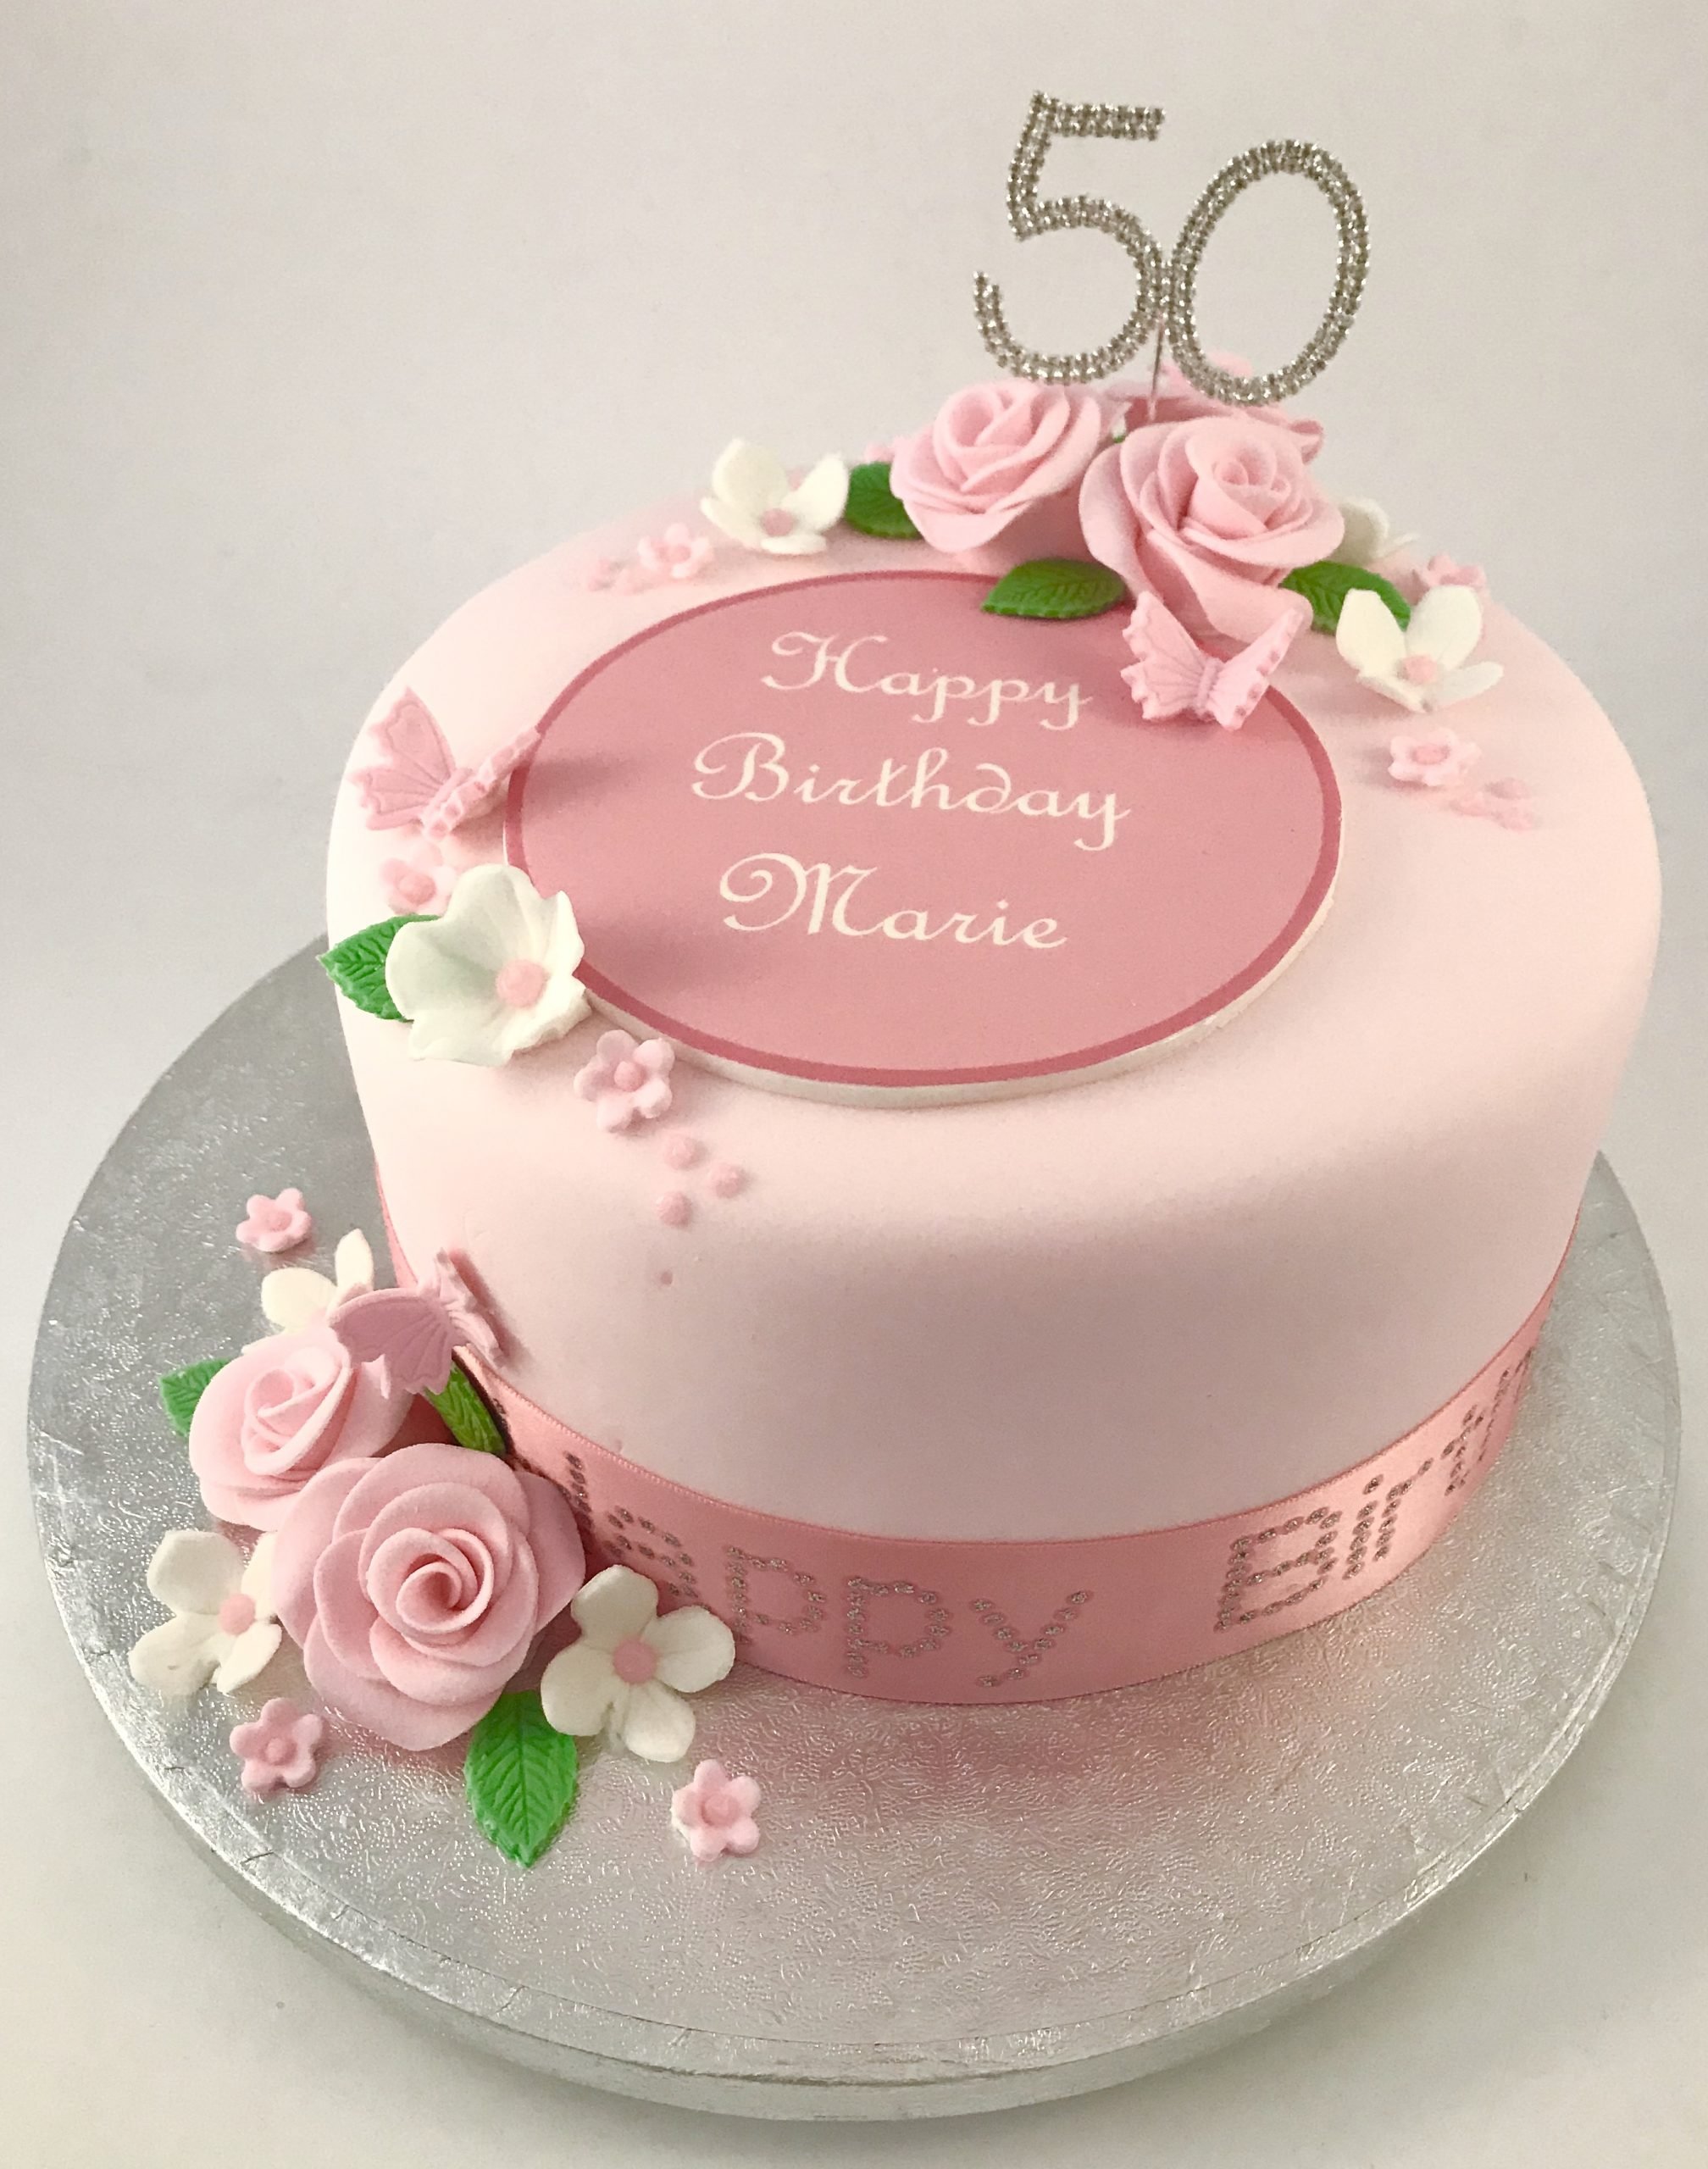 Adult Birthday cake Gallery